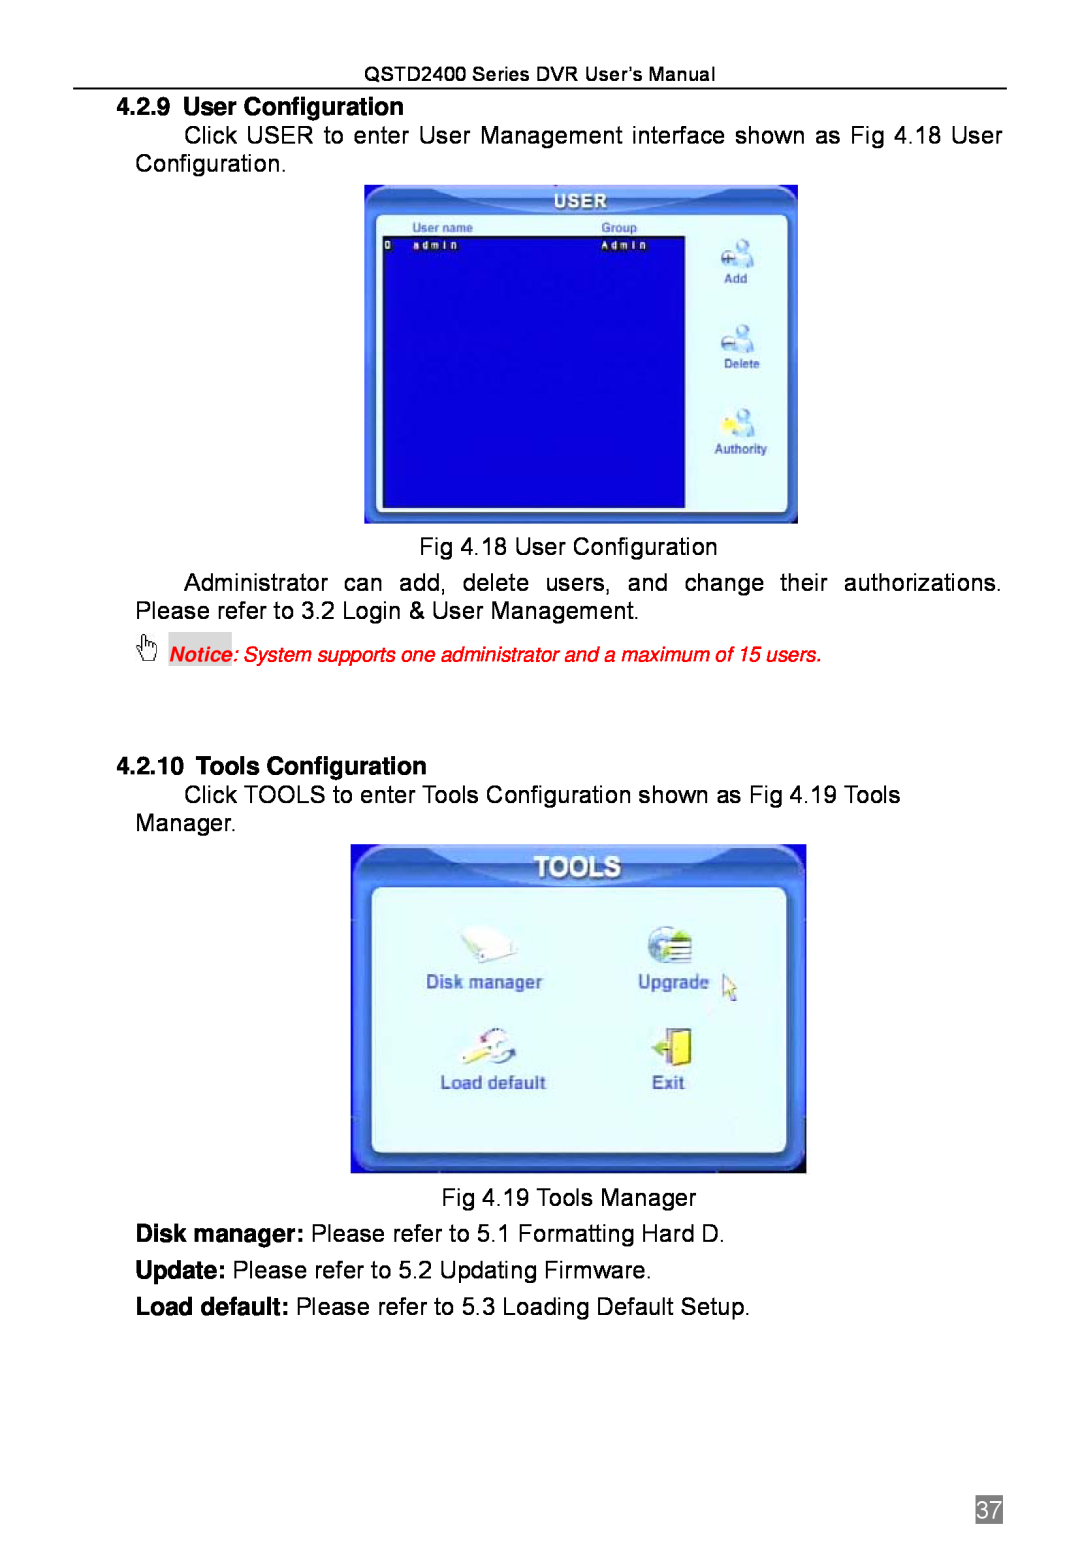 Q-See QSTD2404, QSTD2416, QSTD2408 user manual User Configuration, Tools Configuration 